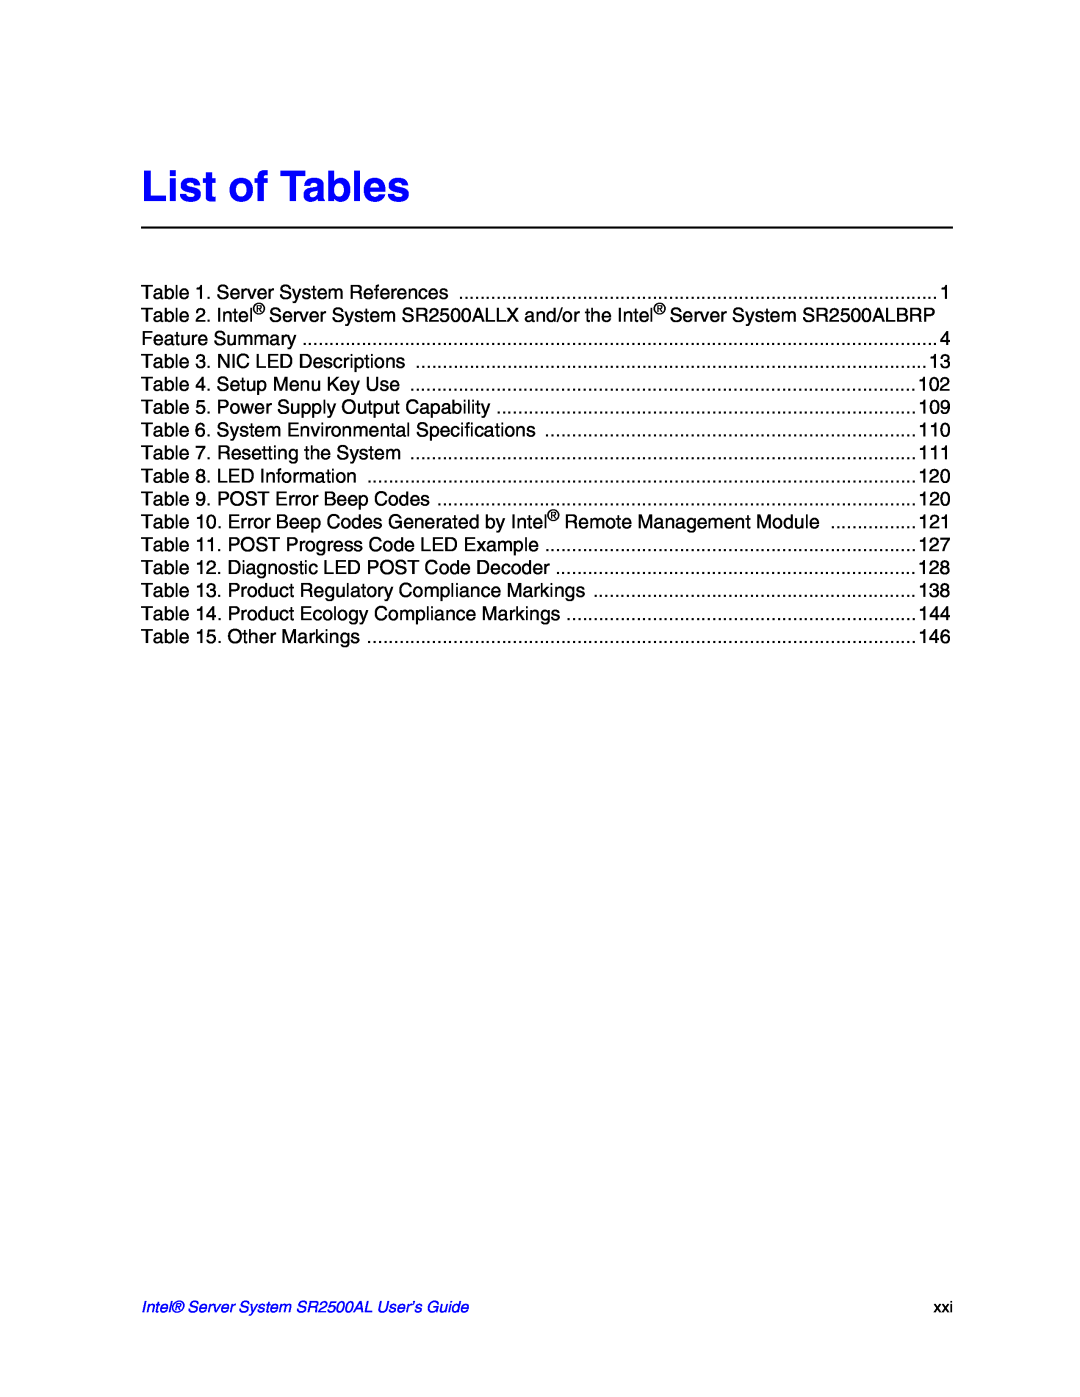 Intel SR2500AL manual List of Tables, Server System References 